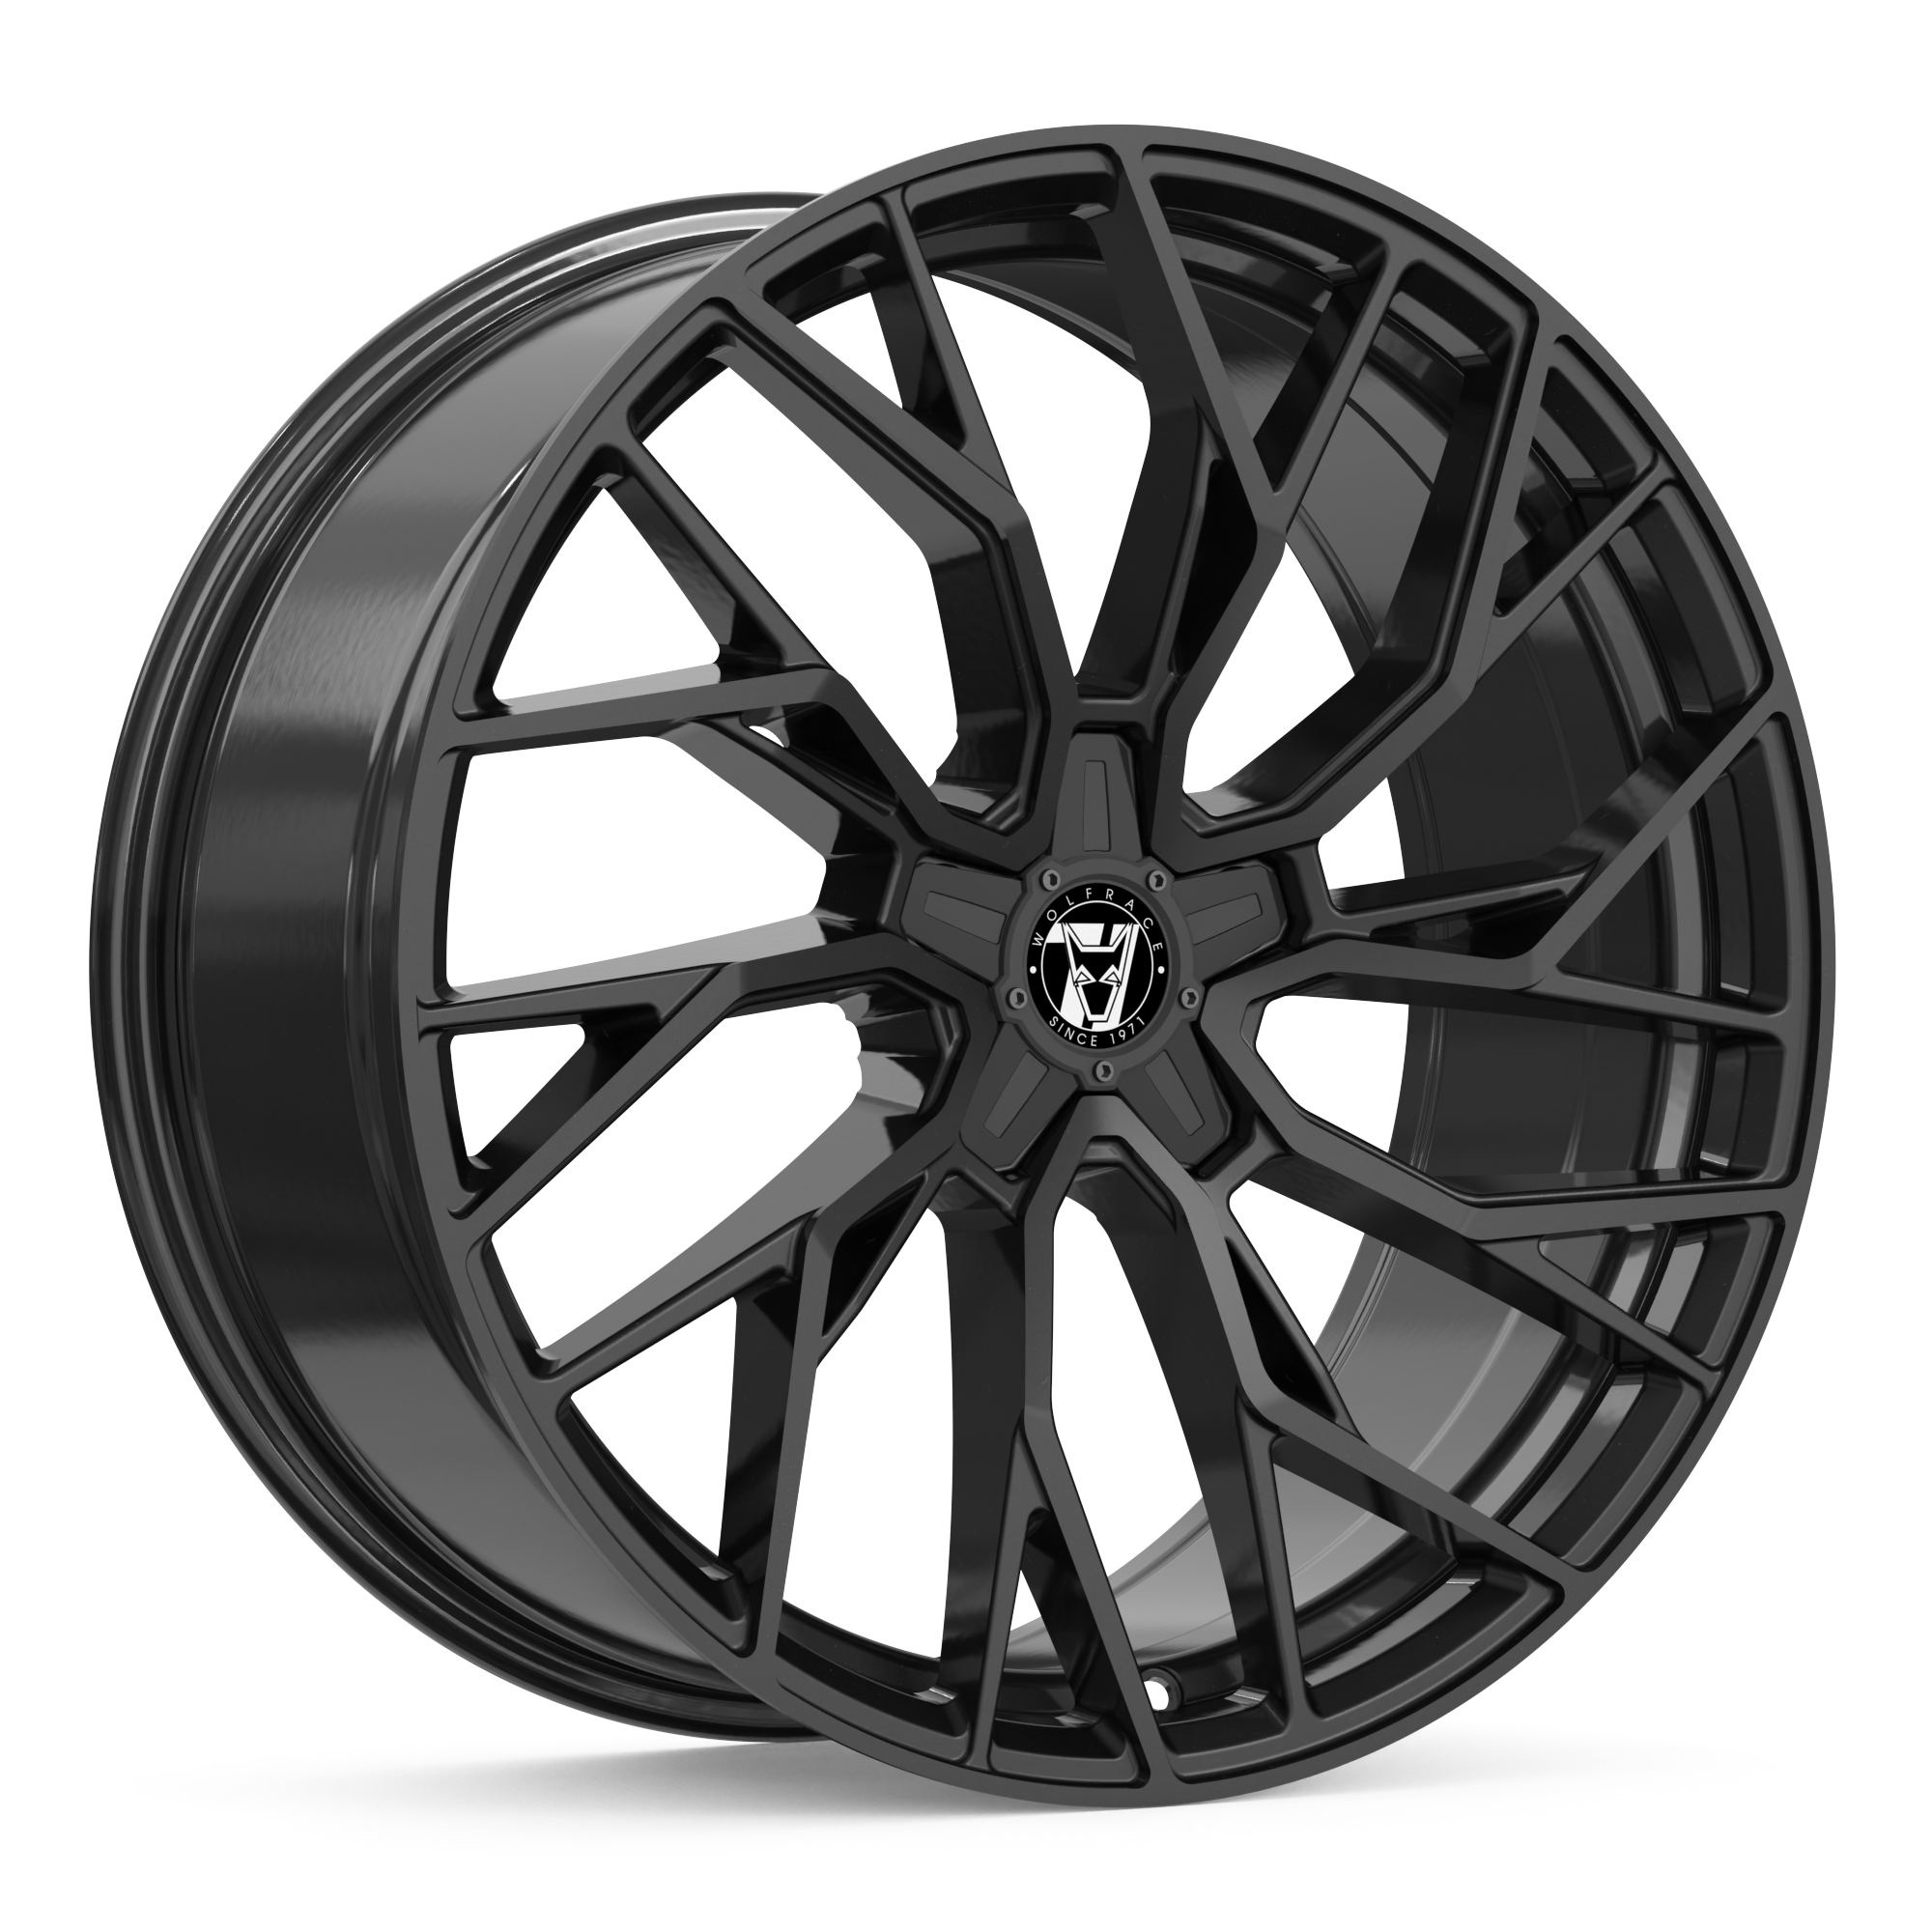 Jantes alu Demon Wheels 71 Voodoo Black Edition [9.5x22] -5x130- ET 45